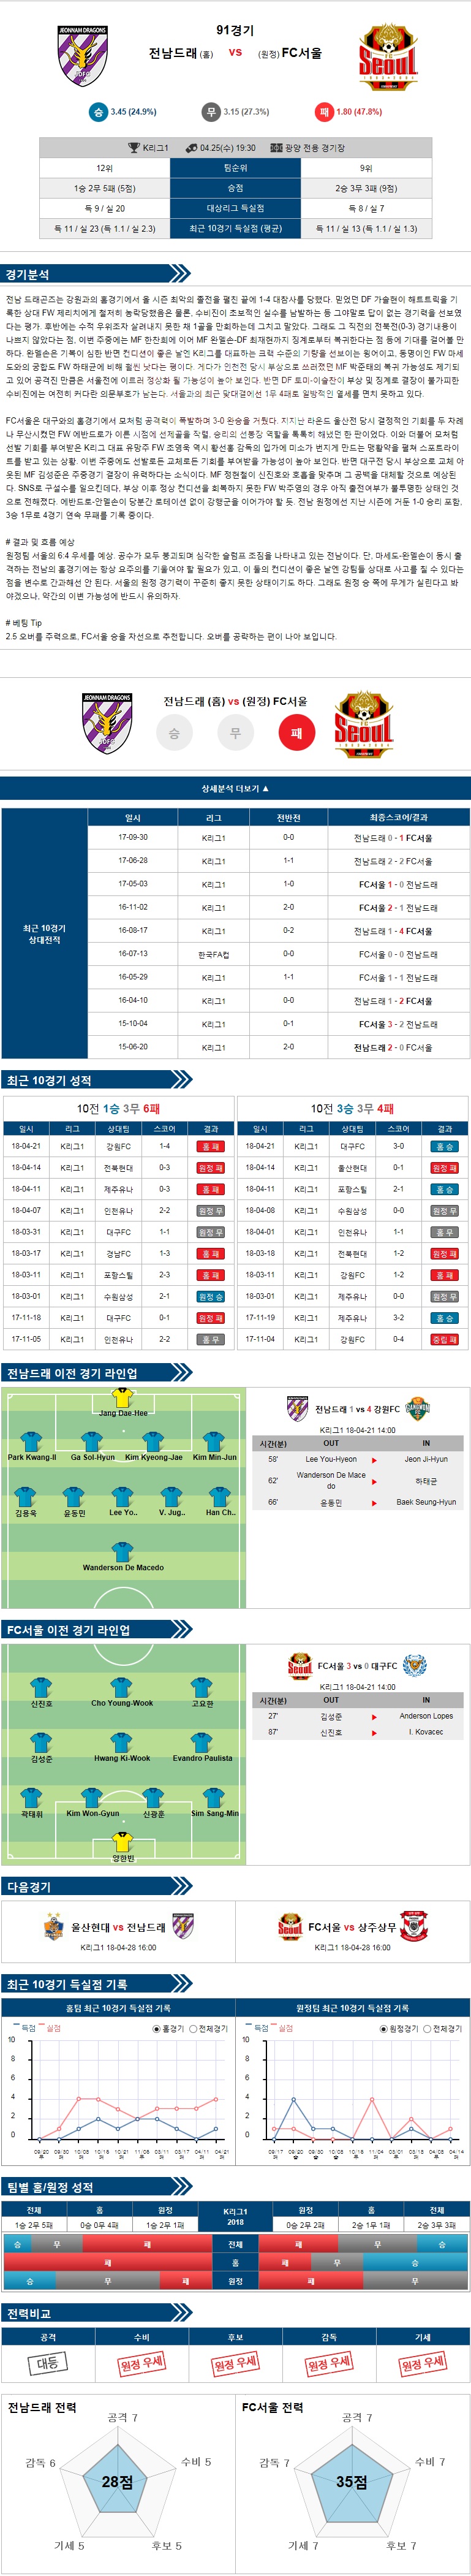 4-25 [KOR D1] 19:30 축구분석 전남 vs 서울